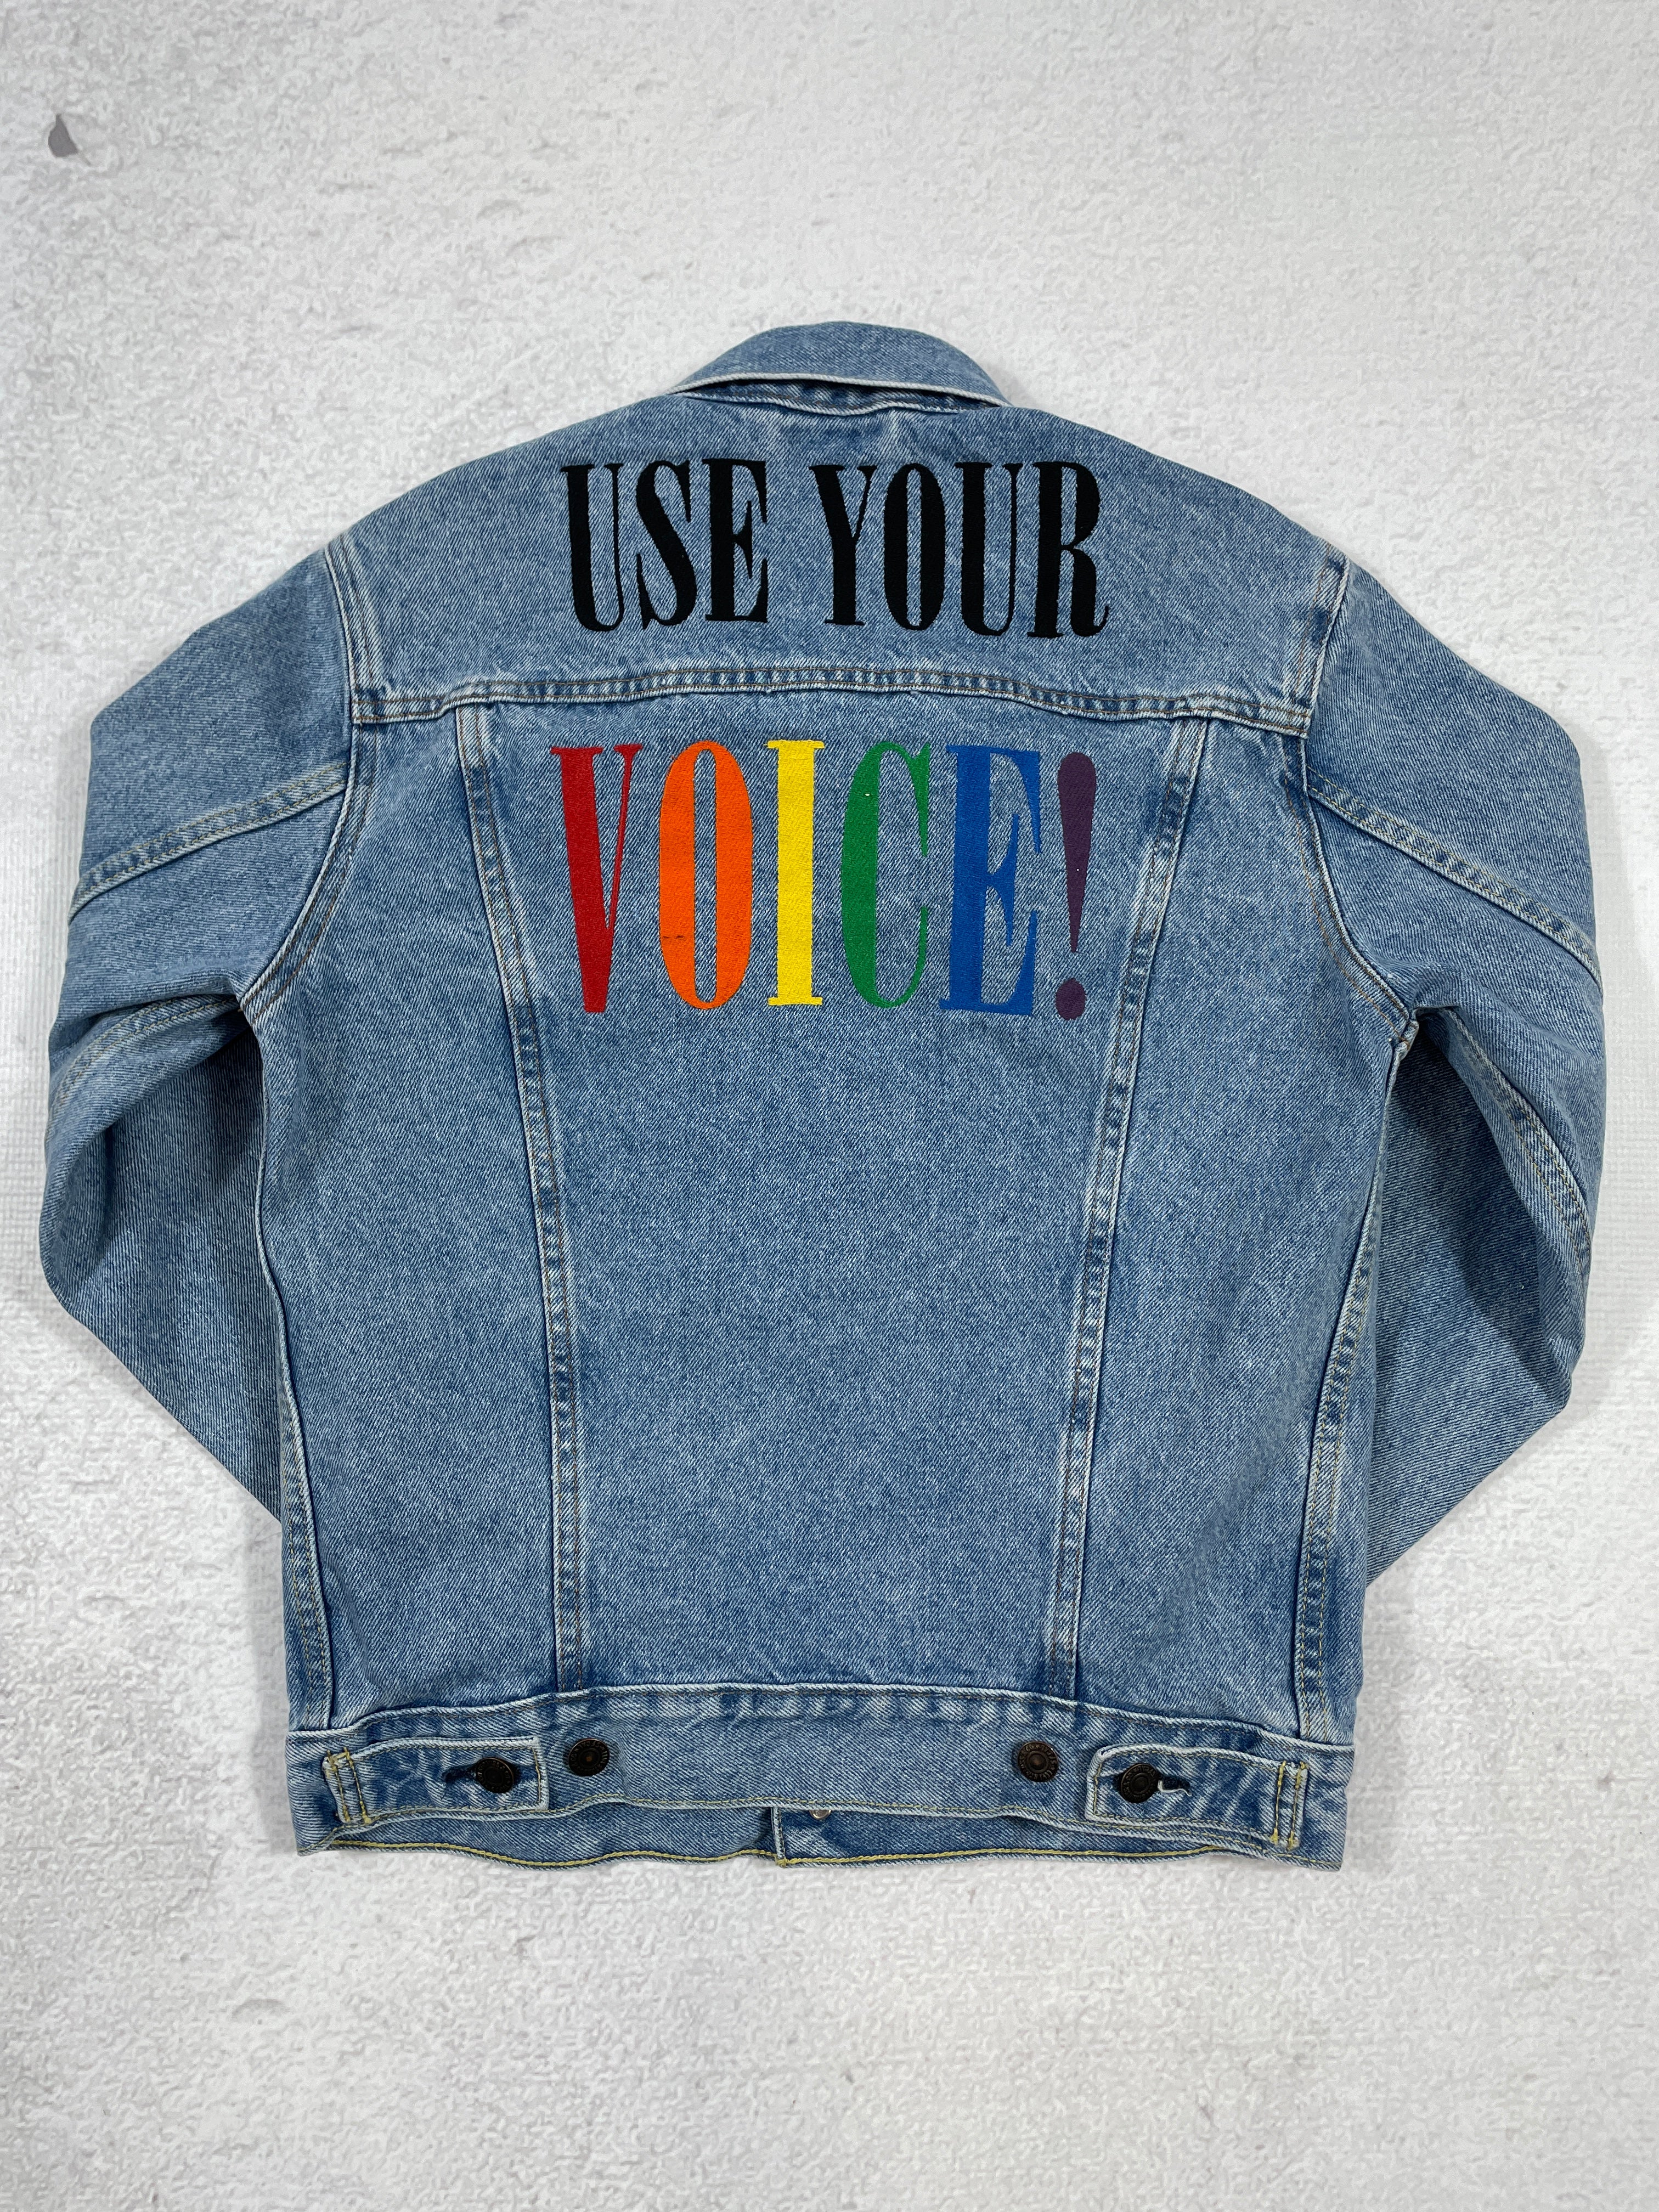 Vintage Levis LGBTQ Denim Jacket - Women's Small